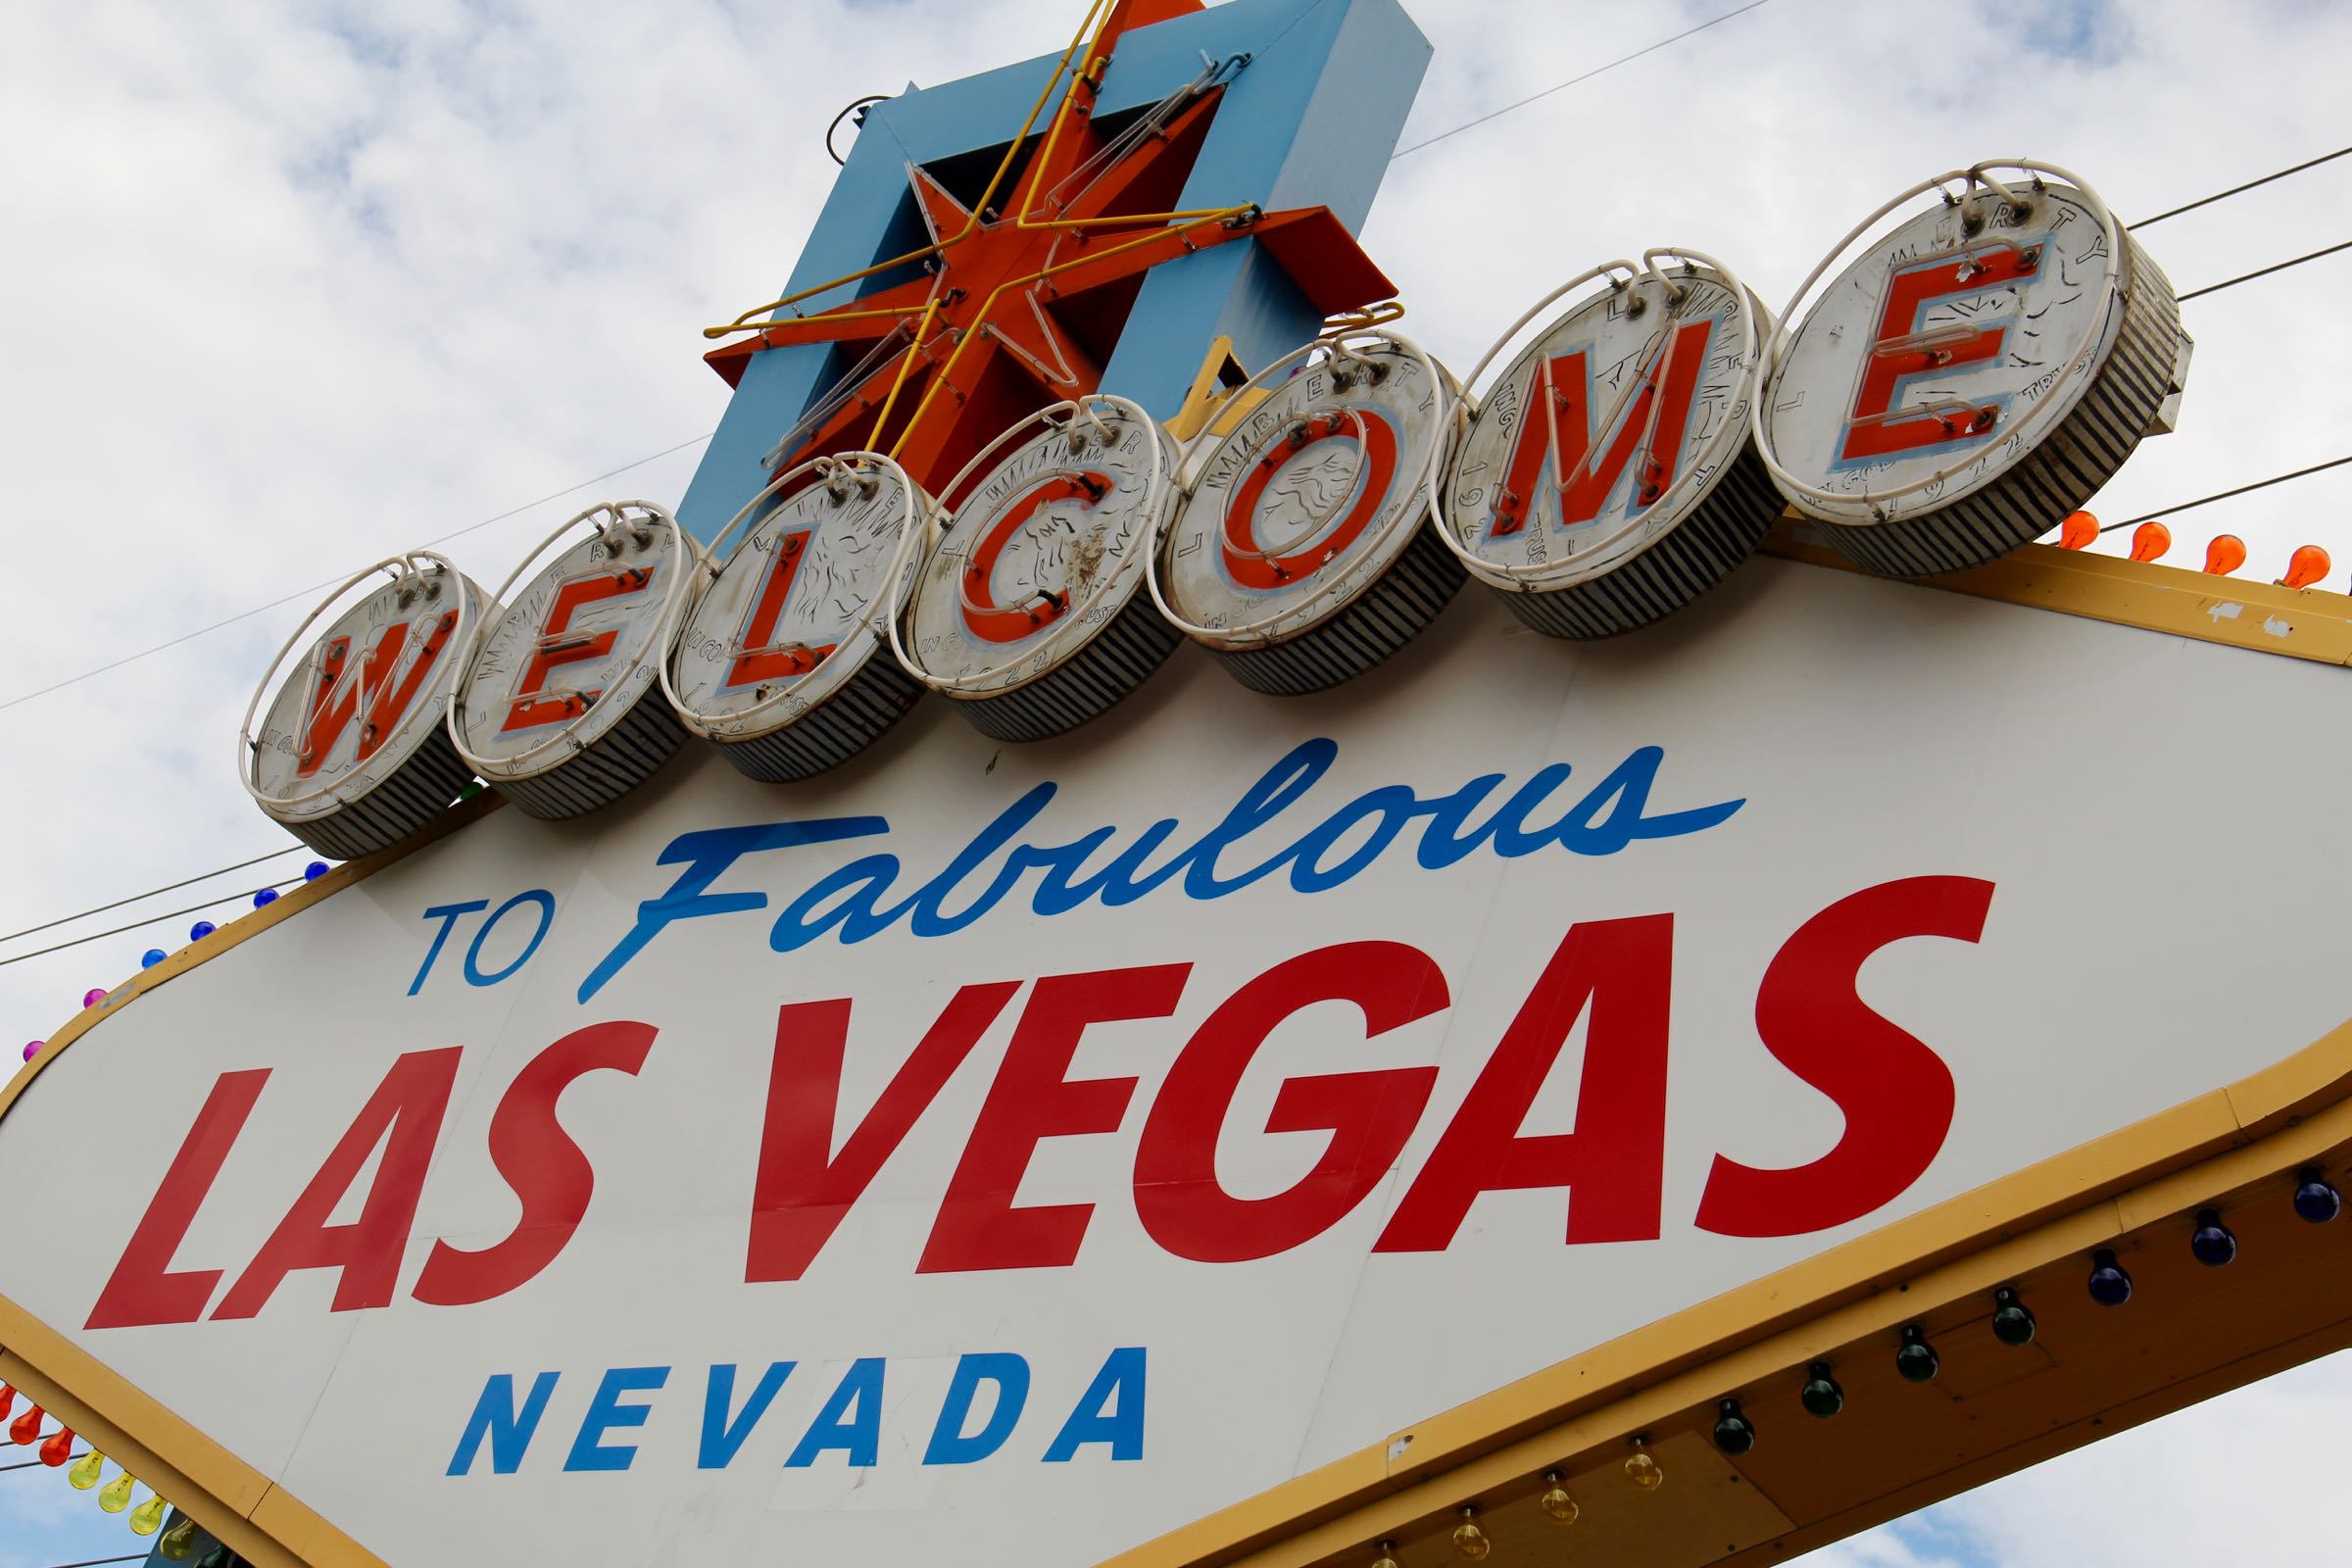 „WELCOME TO Fabulous LAS VEGAS“, Las Vegas, Nevada, USA